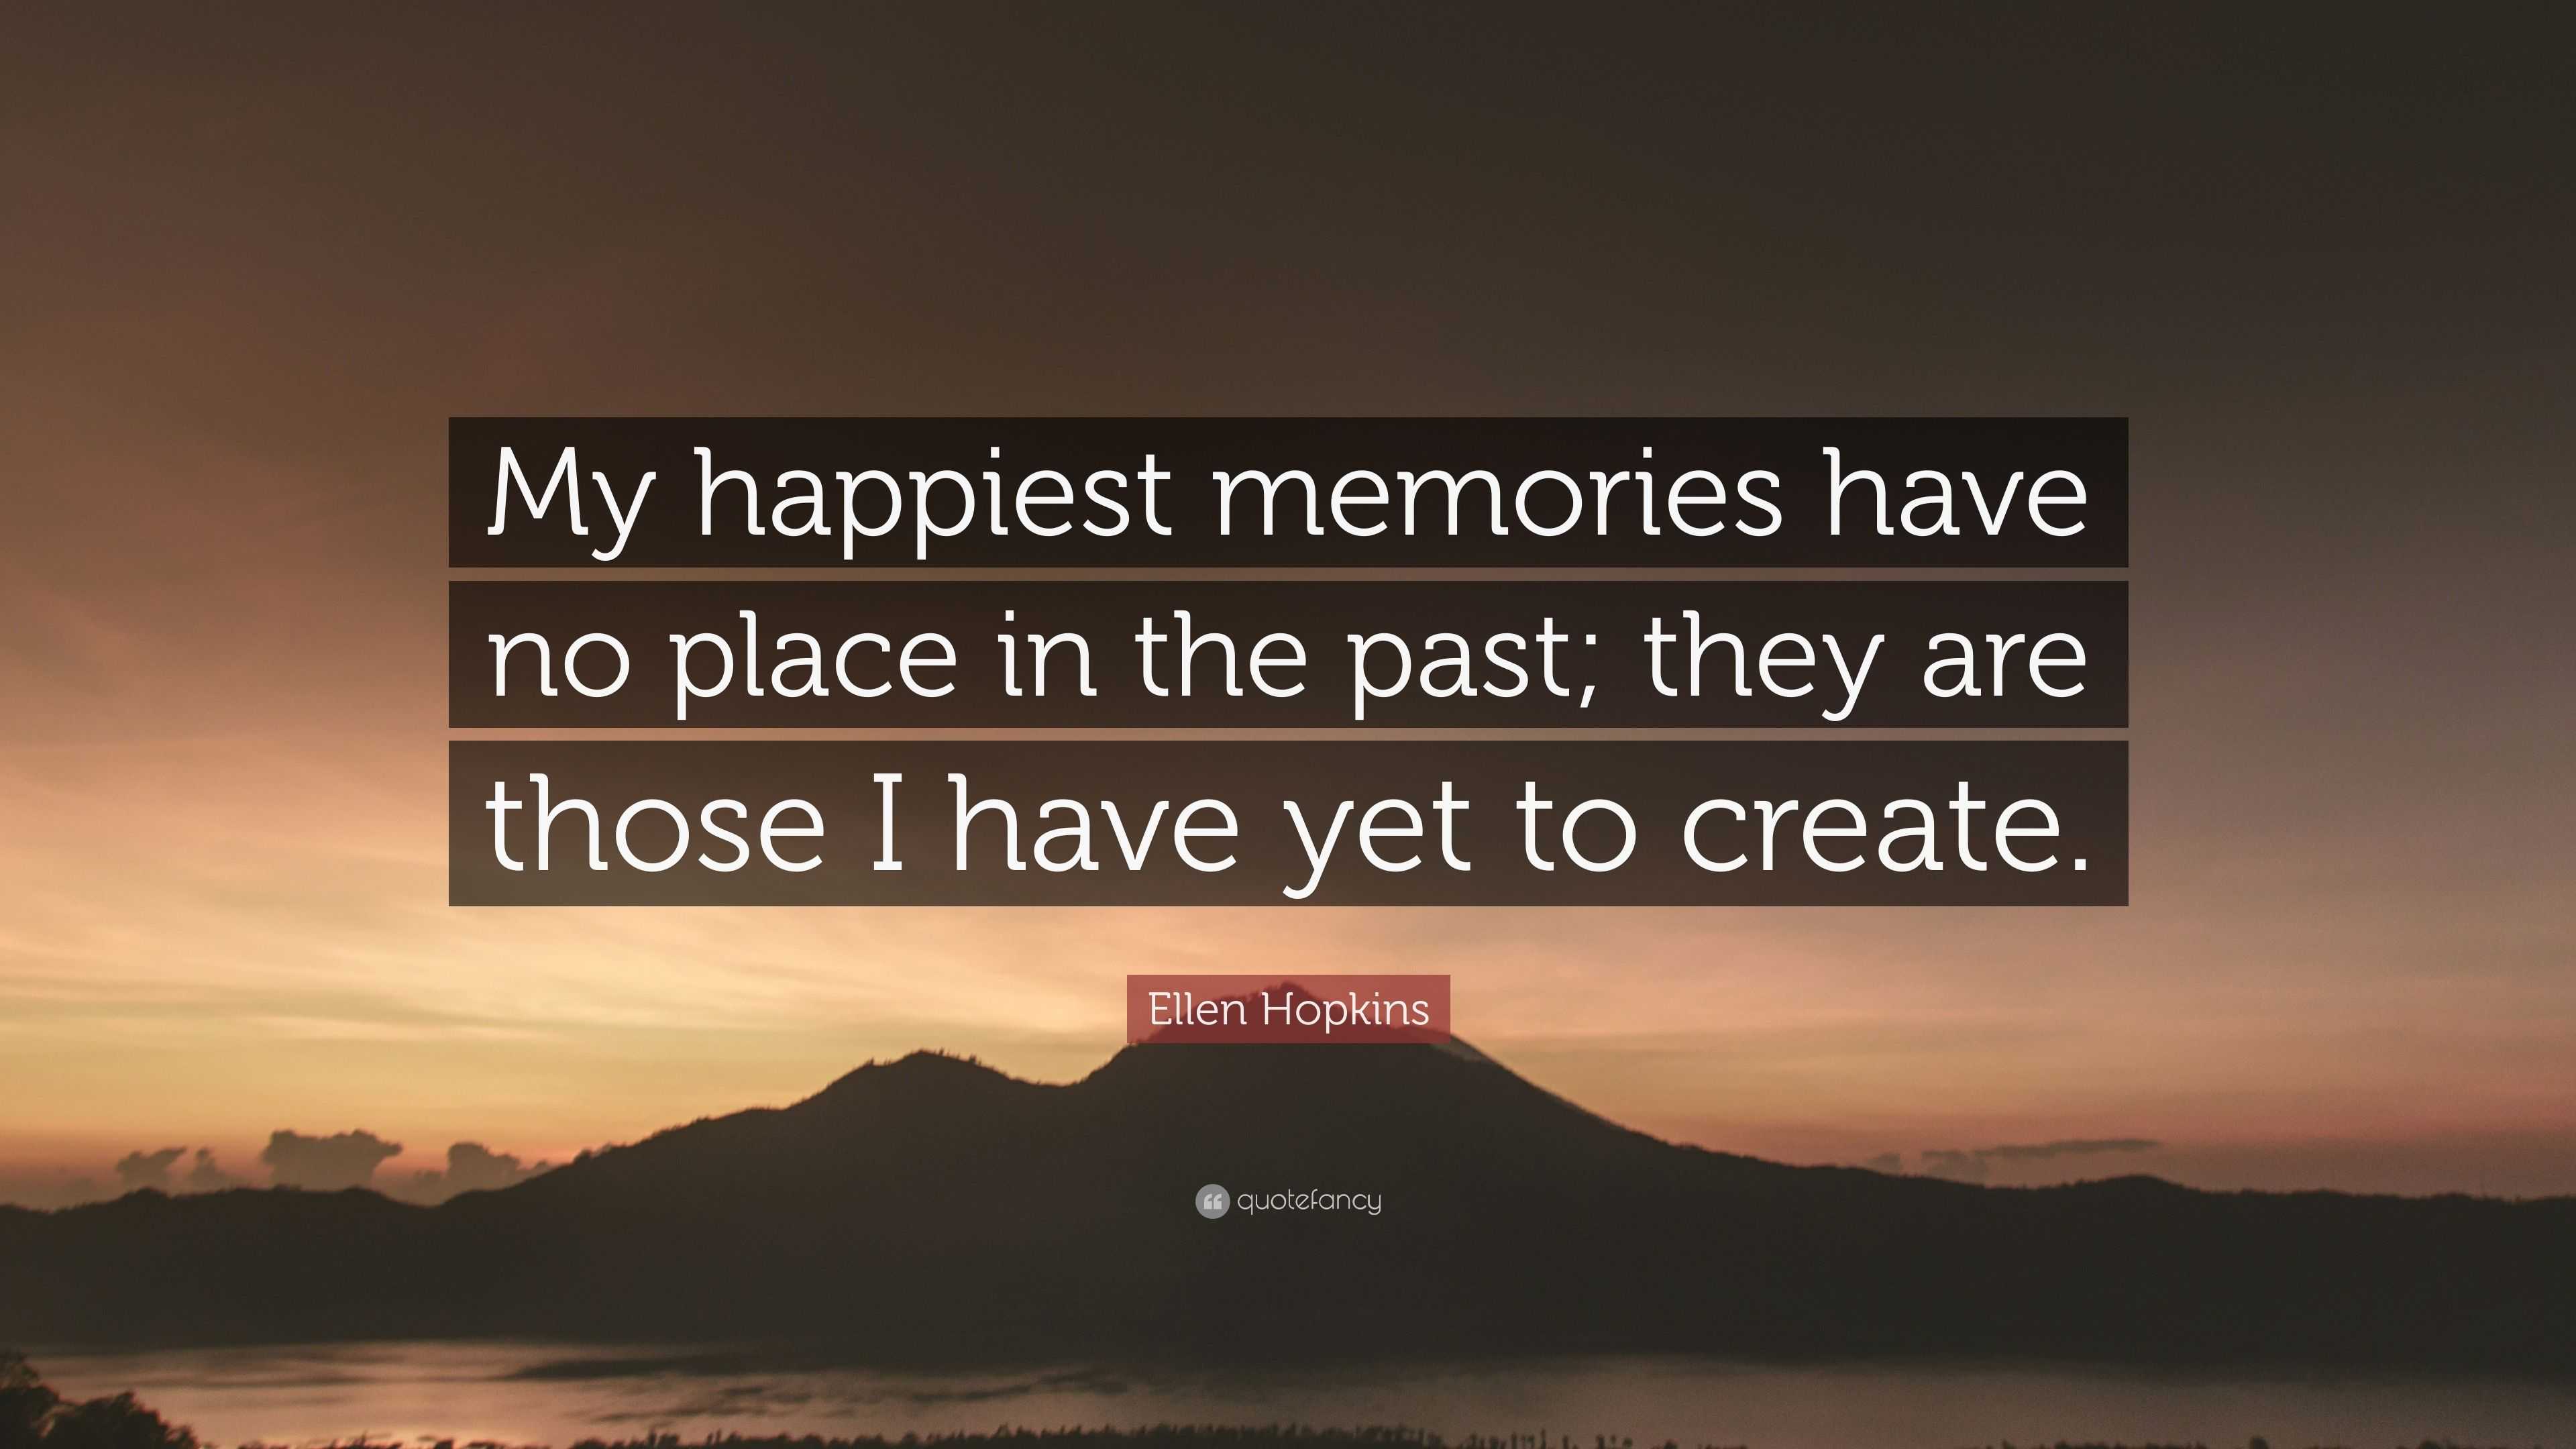 Ellen Hopkins Quote: “My happiest memories have no place in the past ...